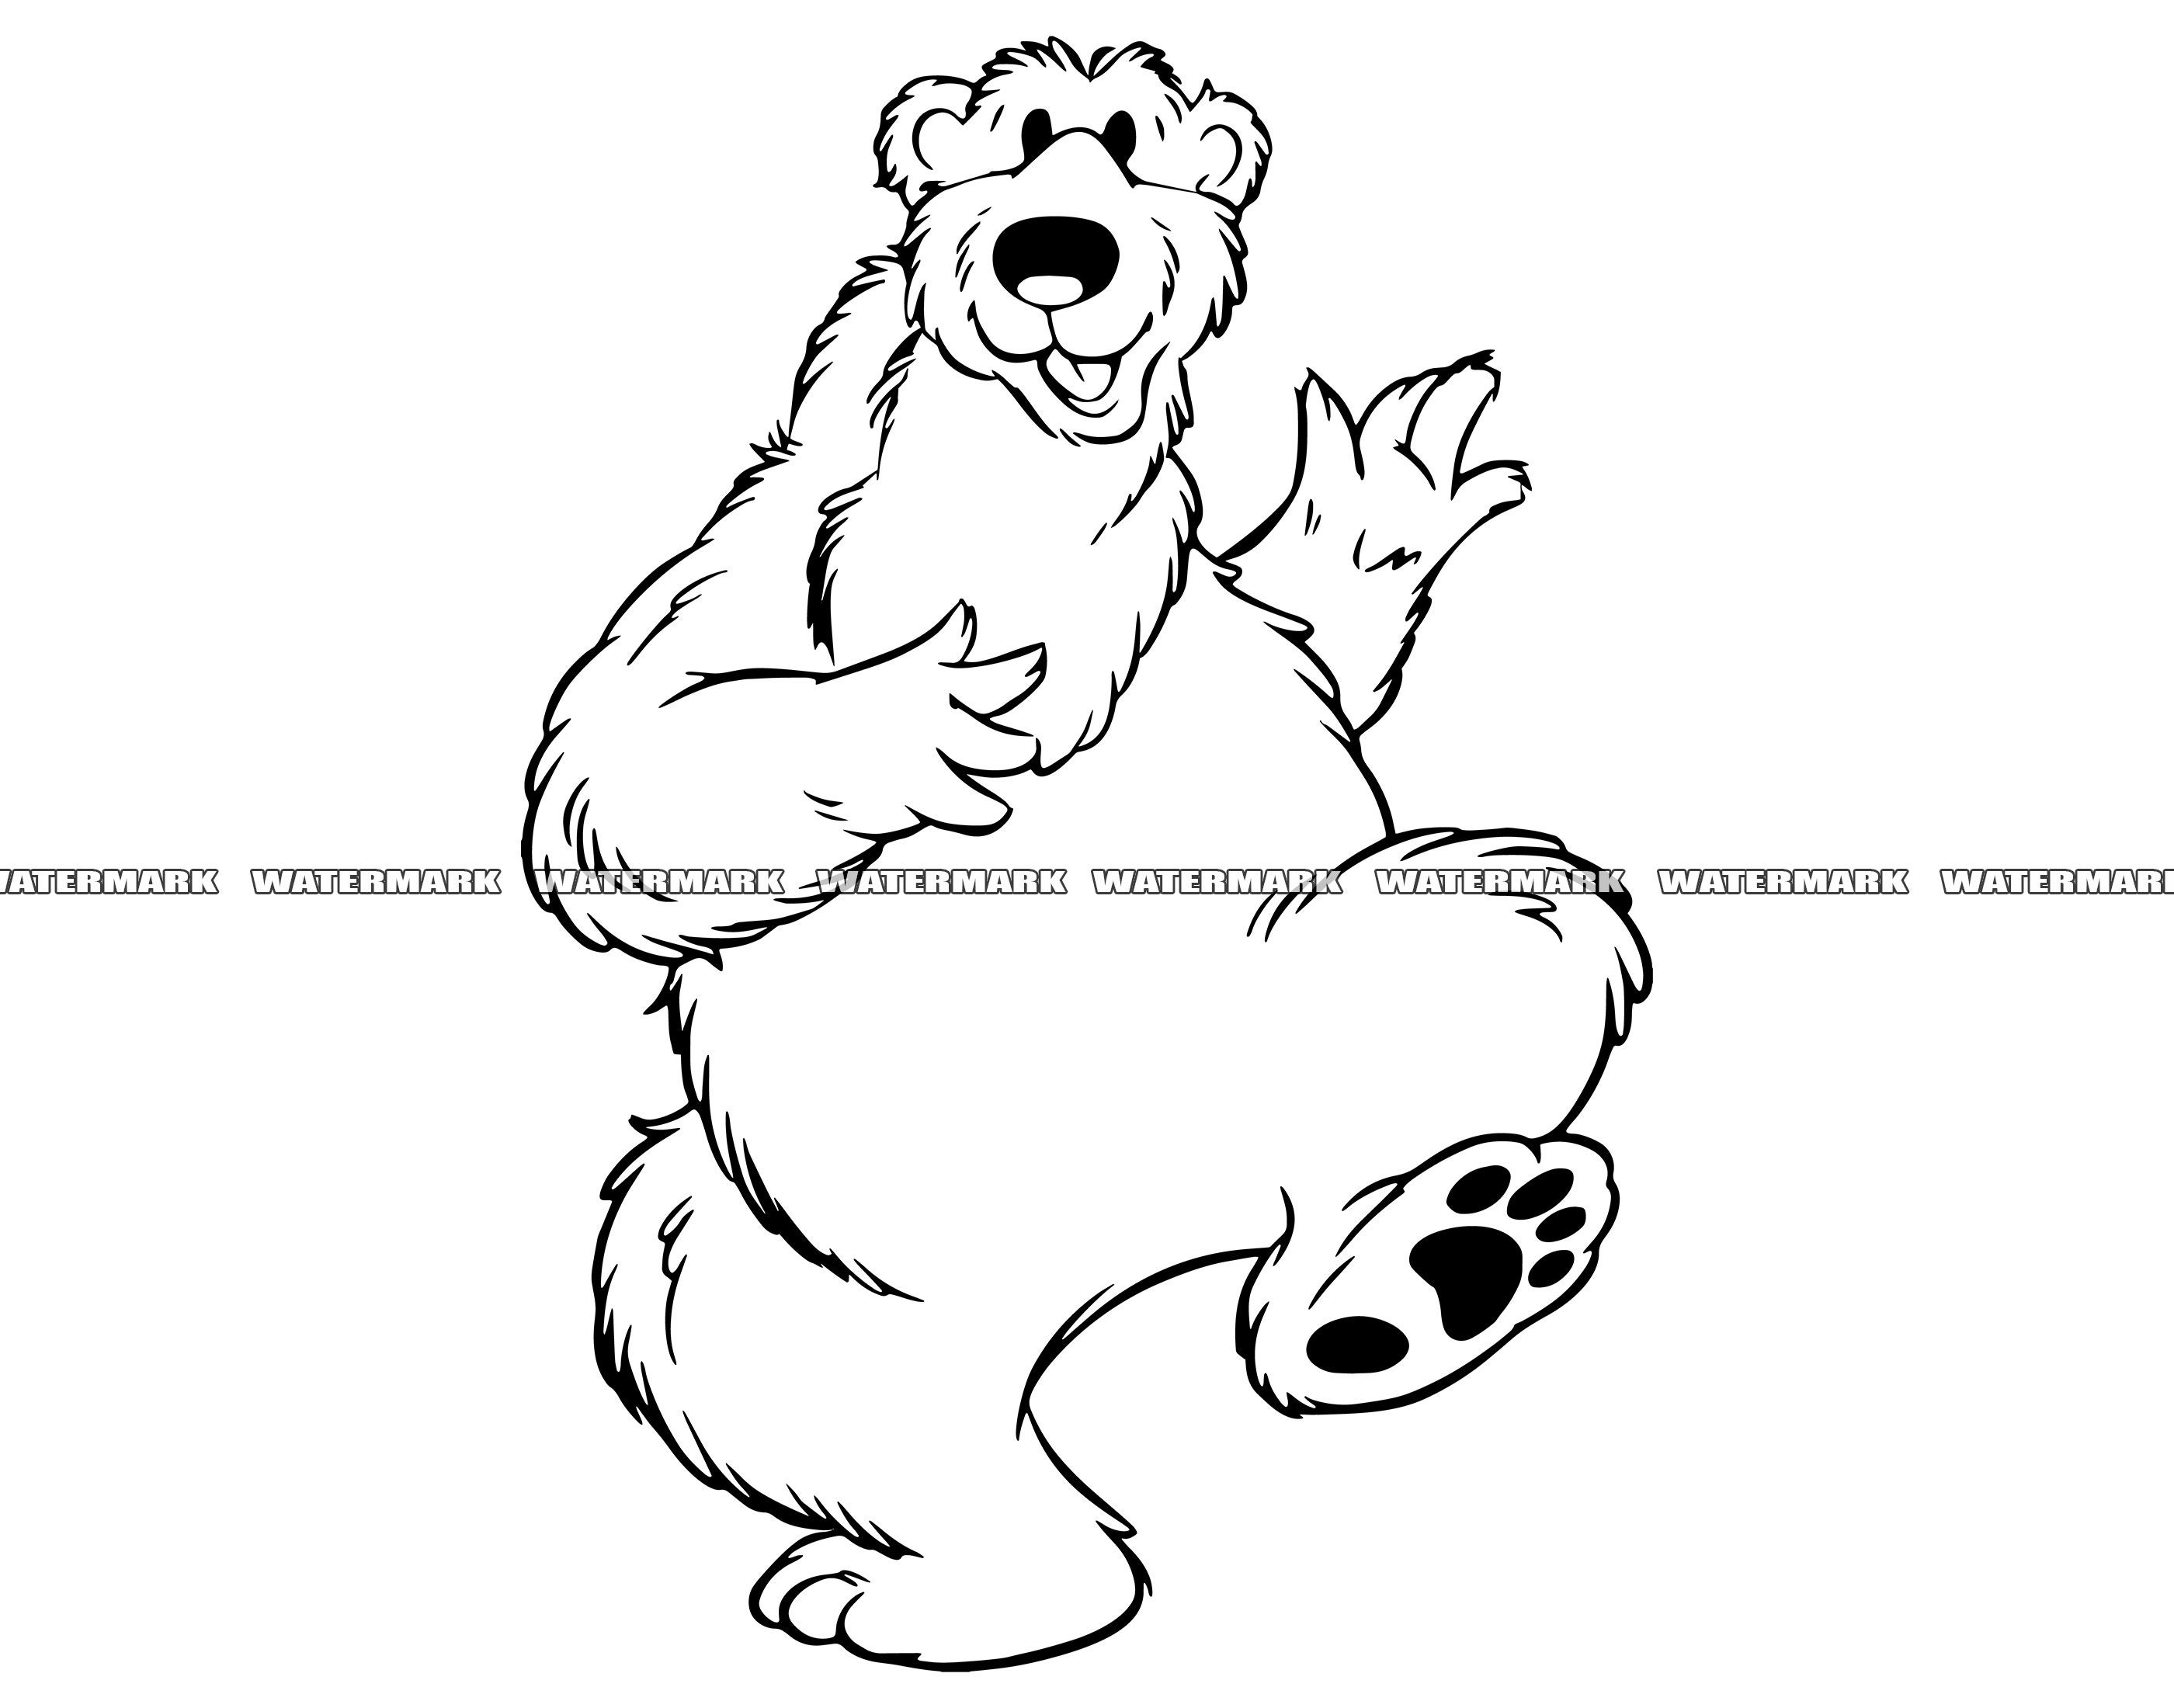 Dancing Bear - wide 8